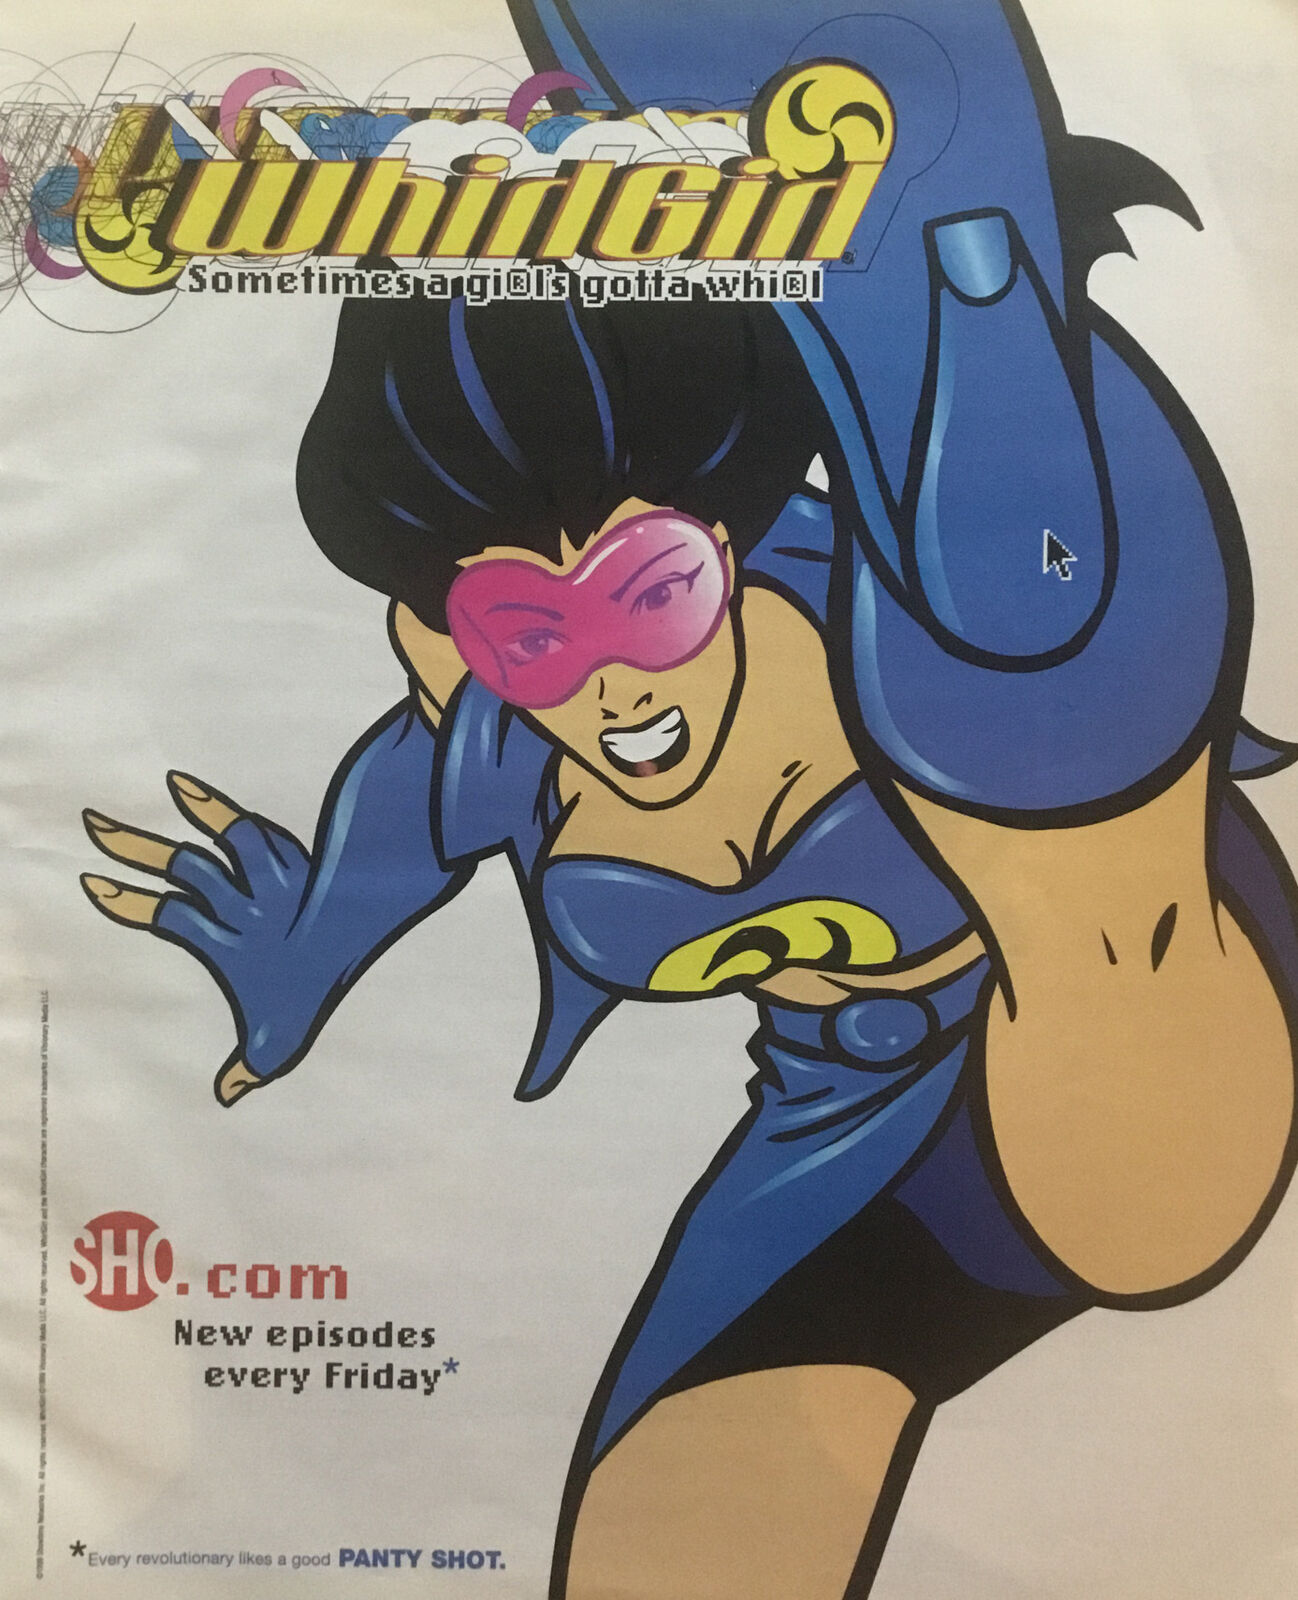 1999 Whirlgirl Showtime Animated Series Magazine PRINT AD Wall Art Decor